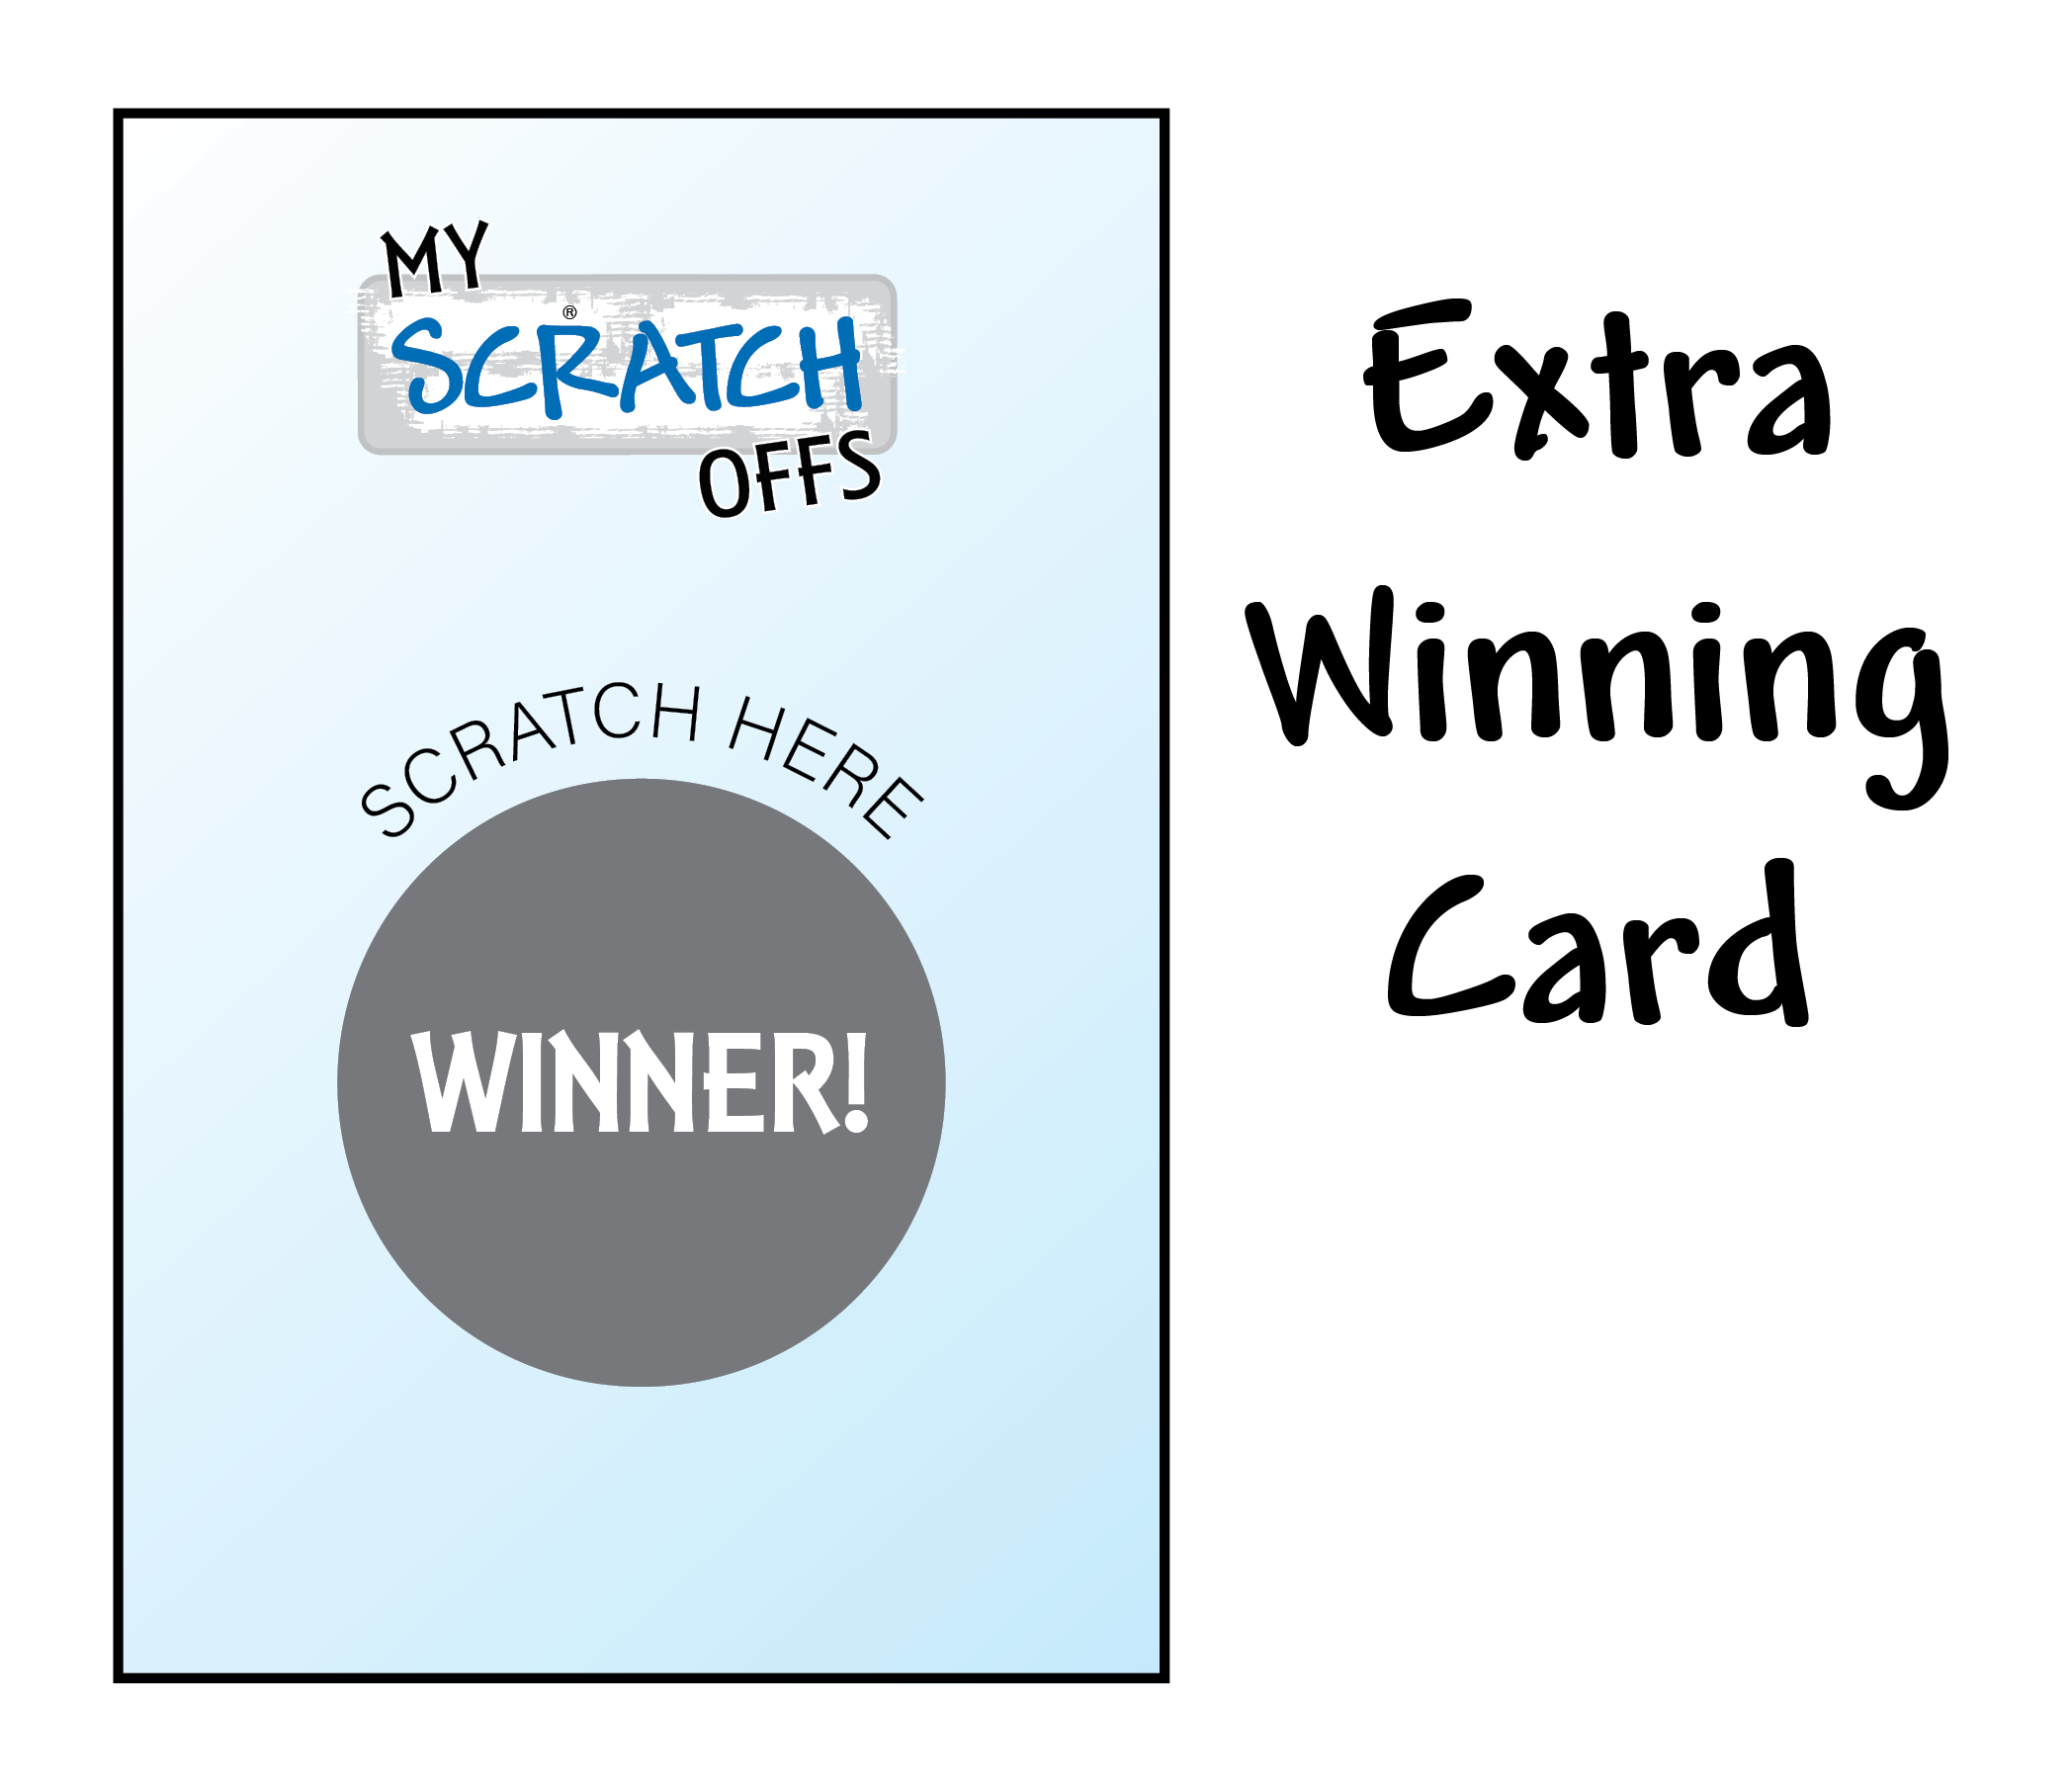 Extra Winning Card - Mardi Gras - My Scratch Offs